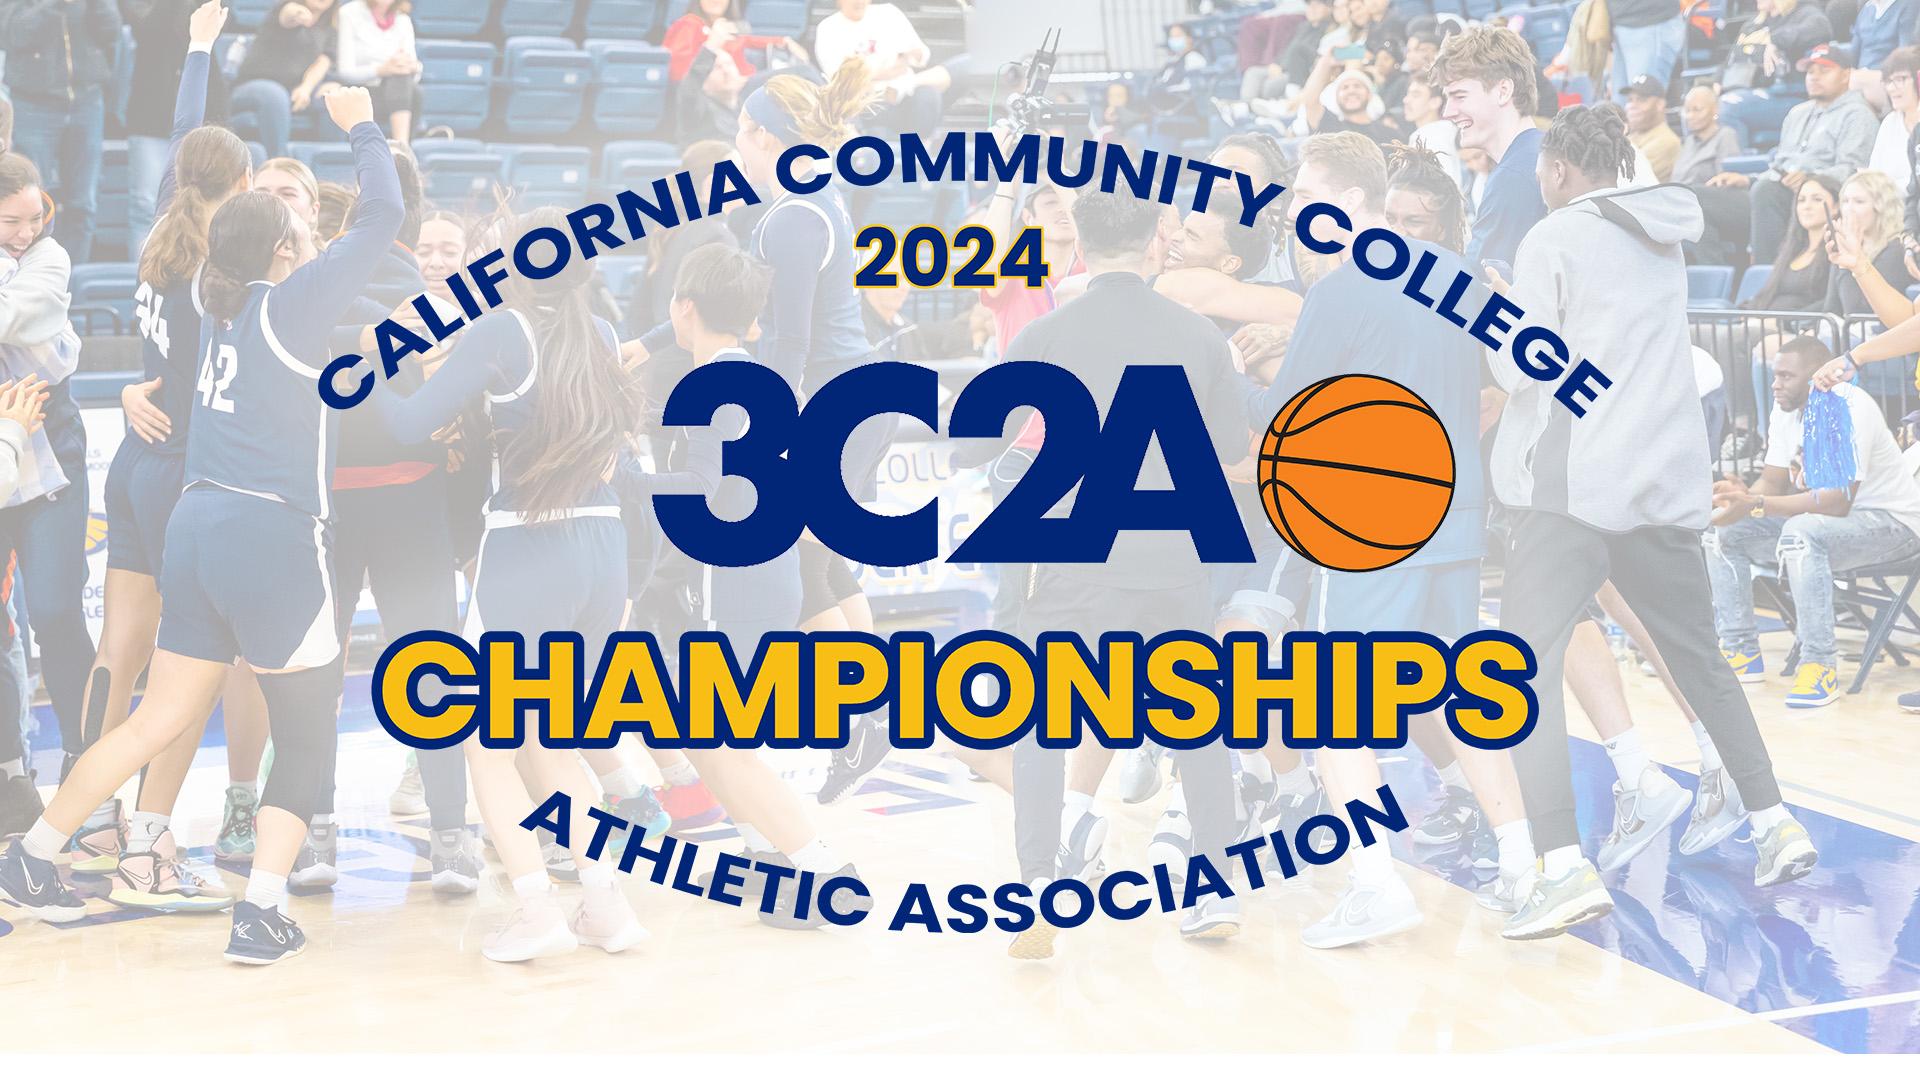 California Community College 2024 SC2A Championships Athletic Association logo